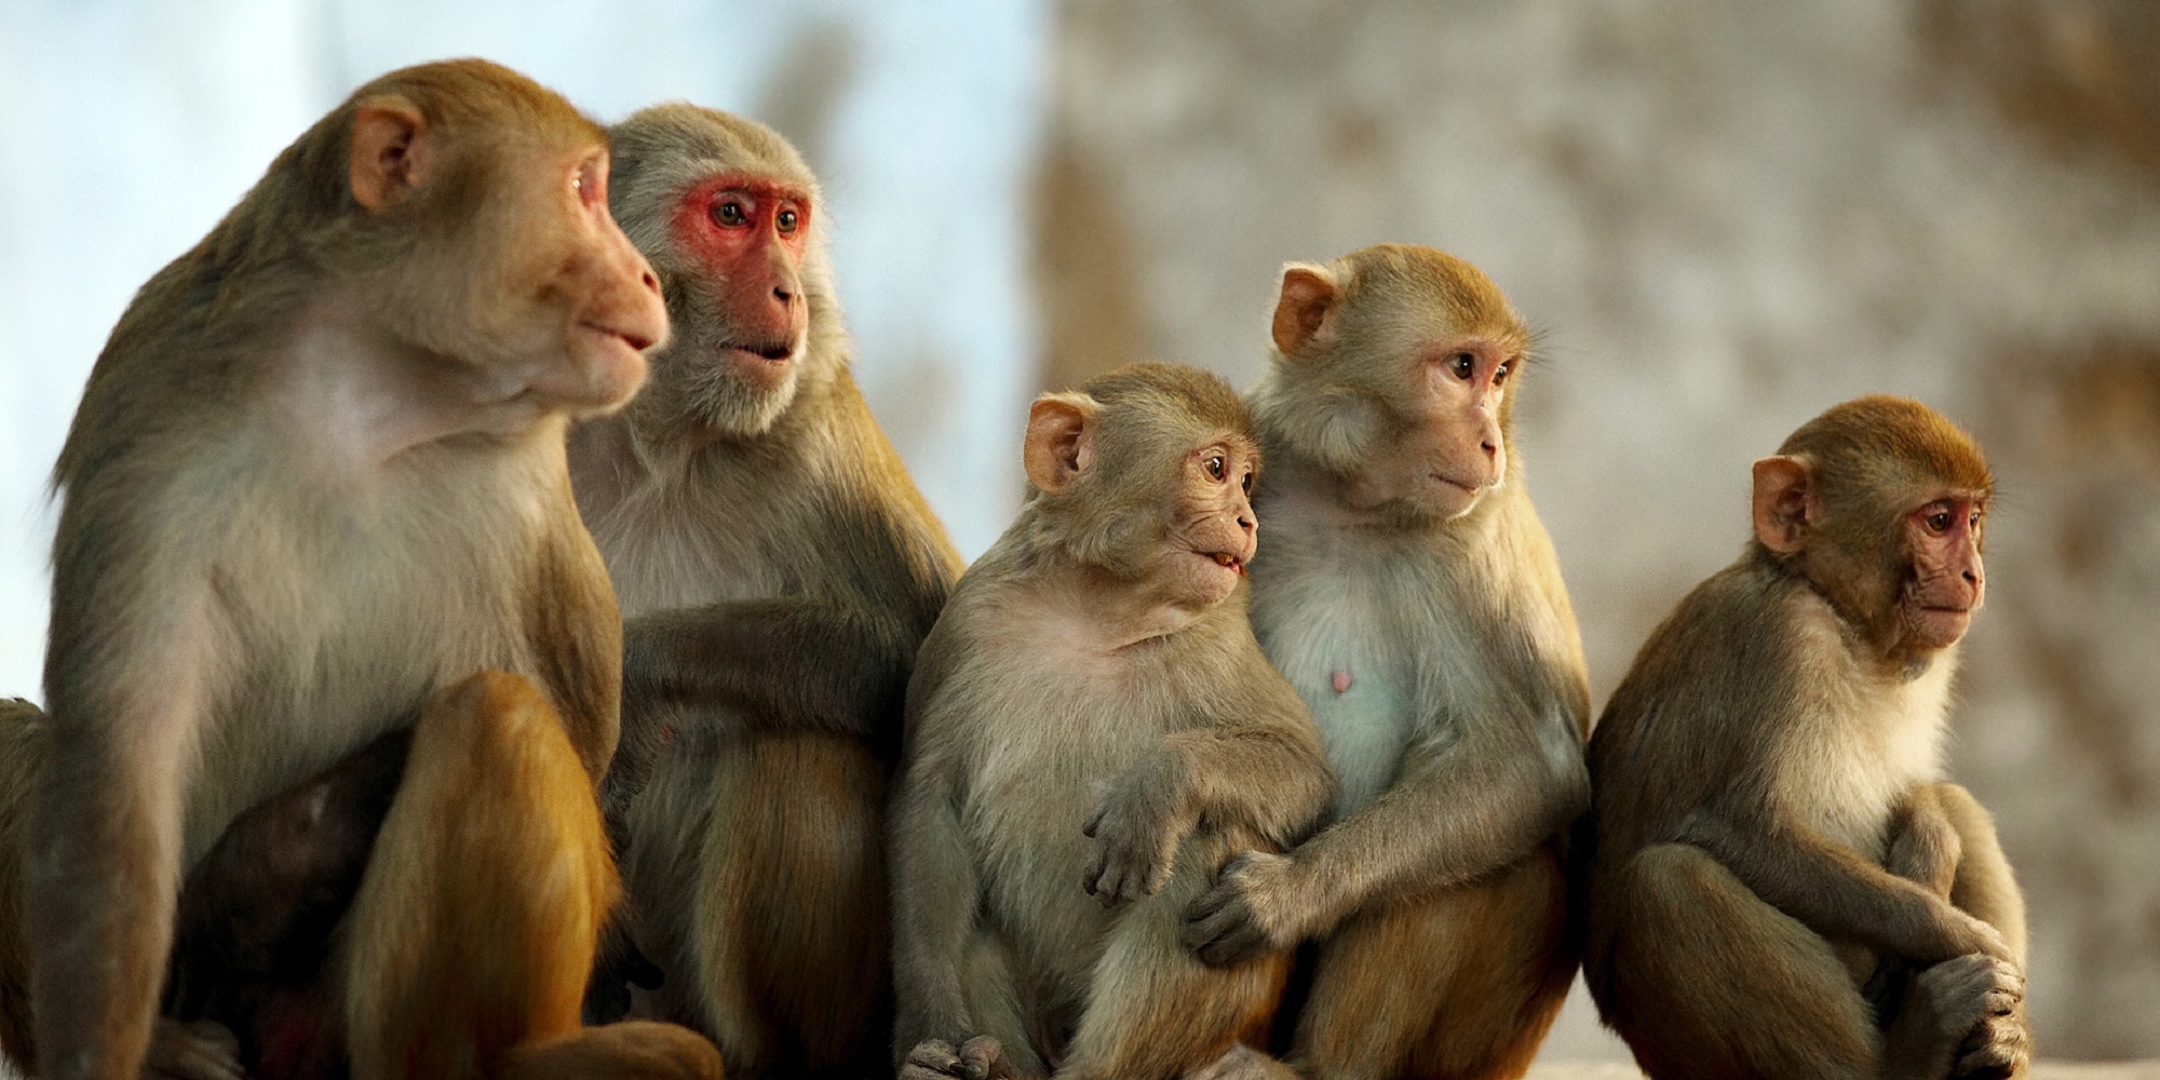 monkey wallpaper for walls,vertebrate,rhesus macaque,mammal,macaque,primate